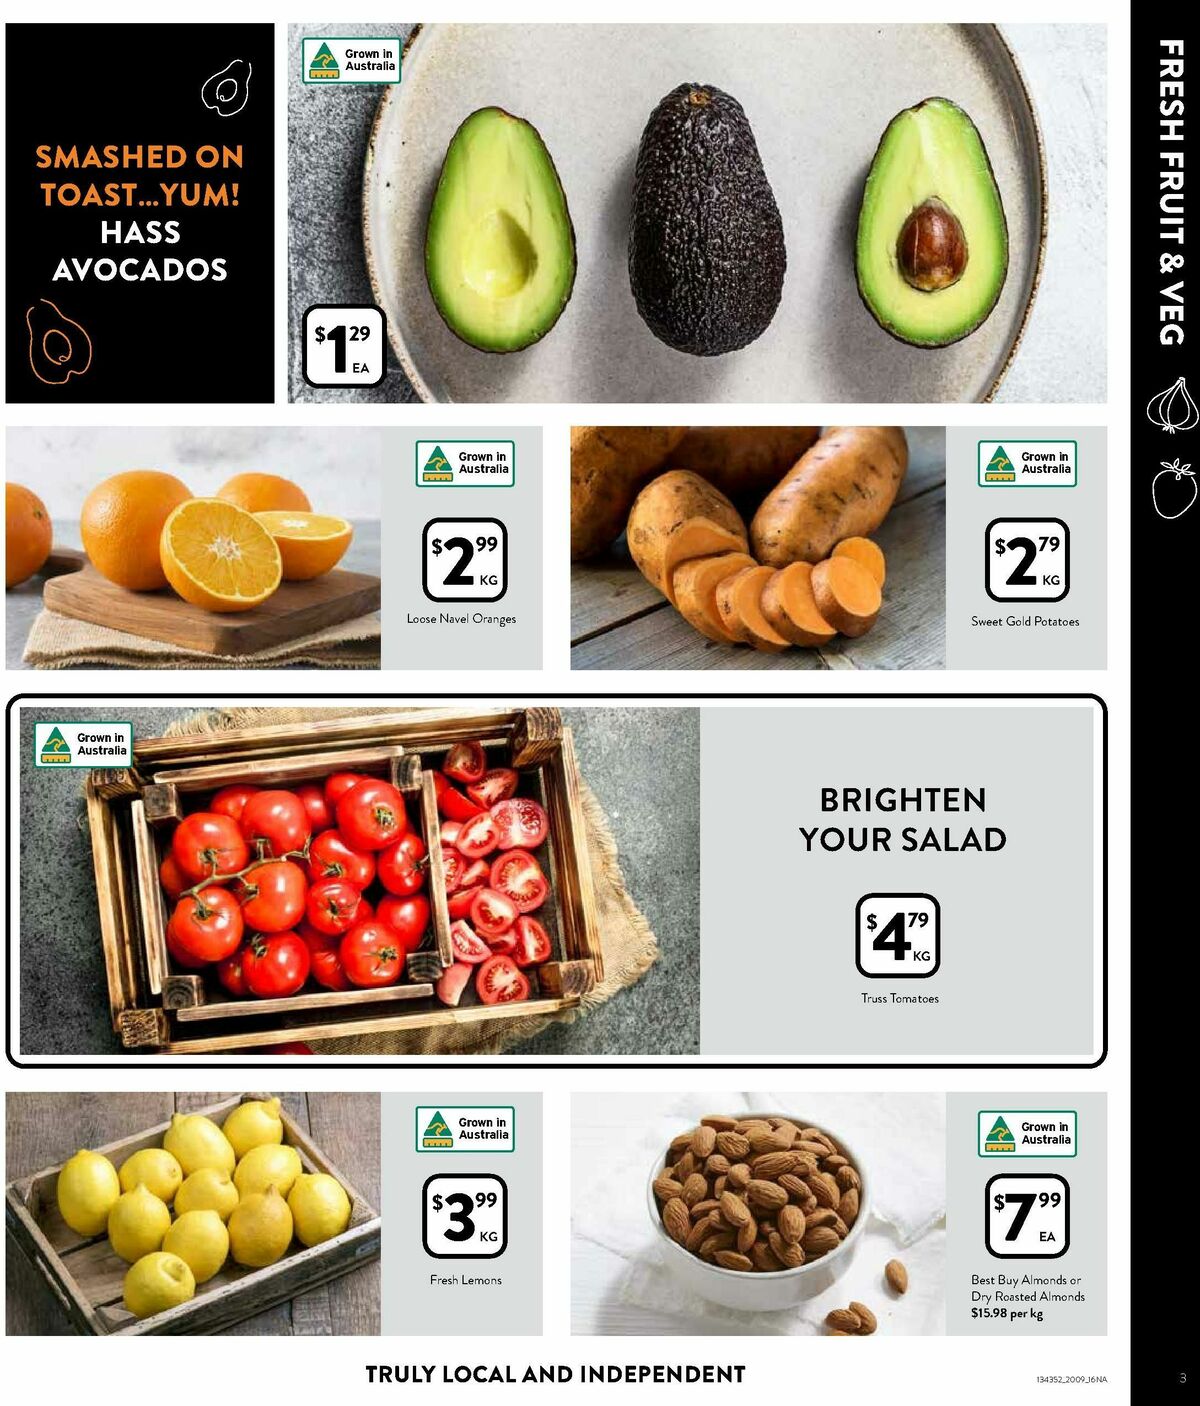 FoodWorks Supermarket Catalogues from 20 September